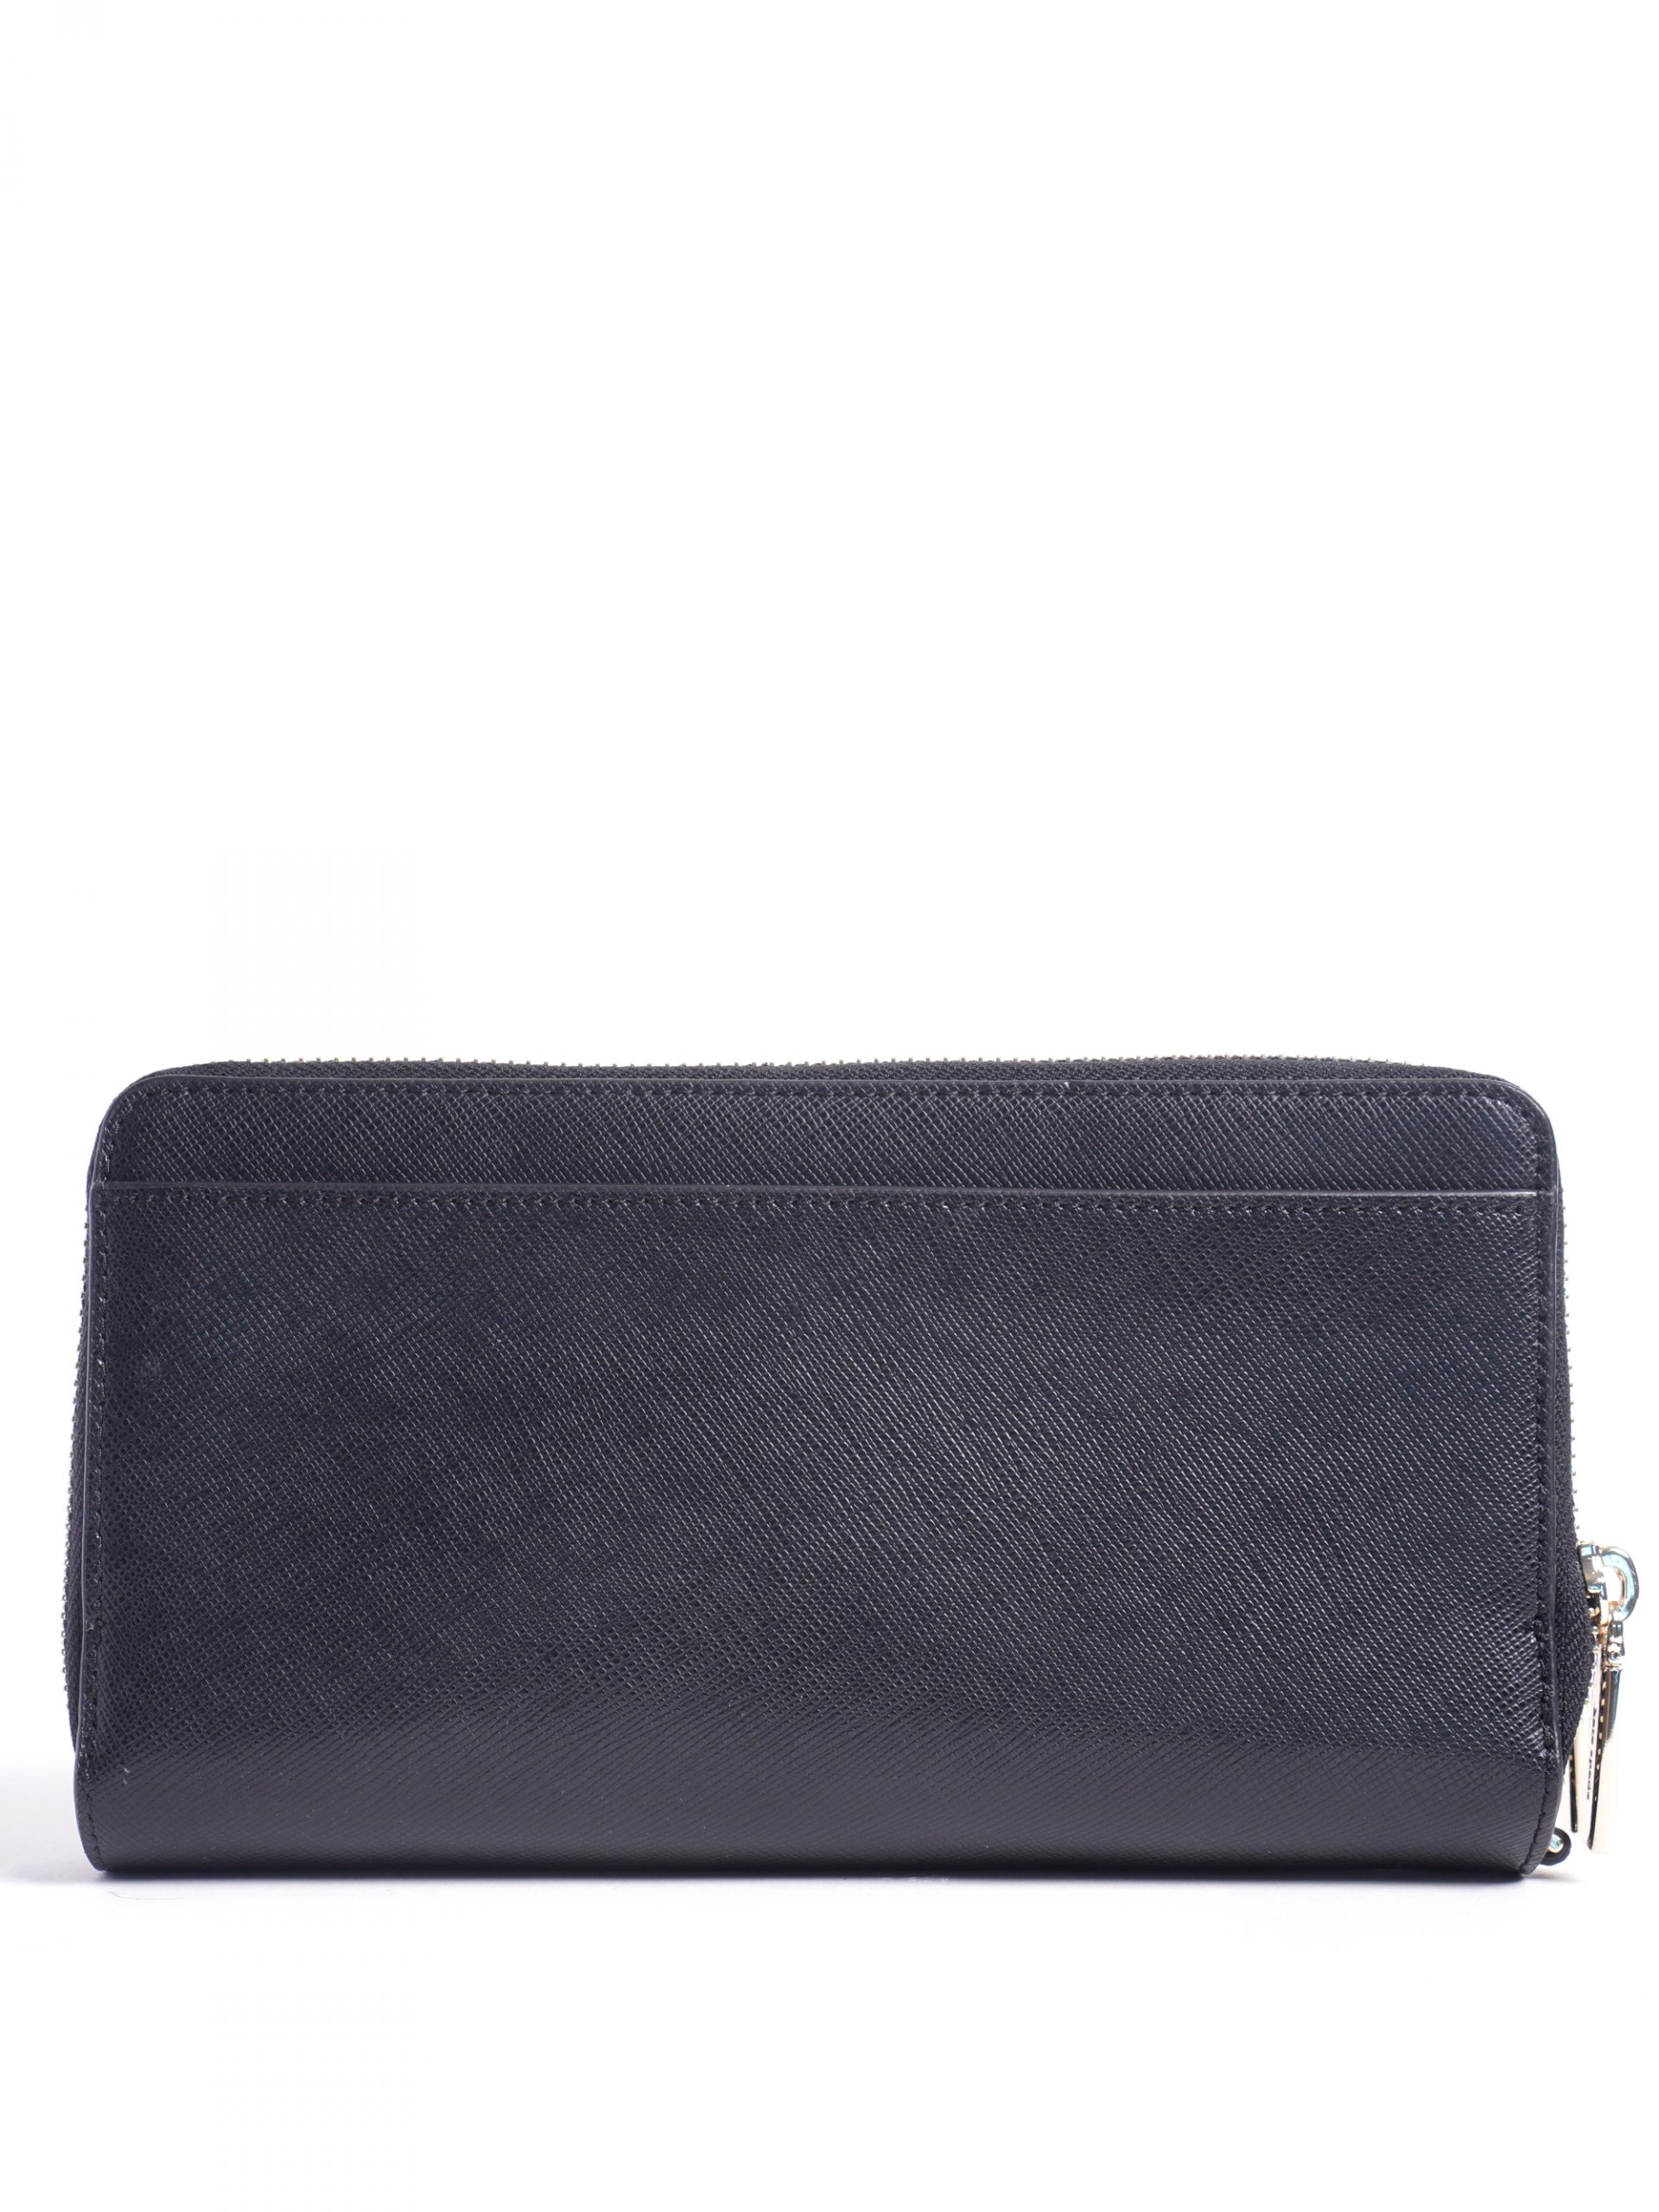 Kate Spade Staci Large Carryall Wallet Wristlet Black - Averand